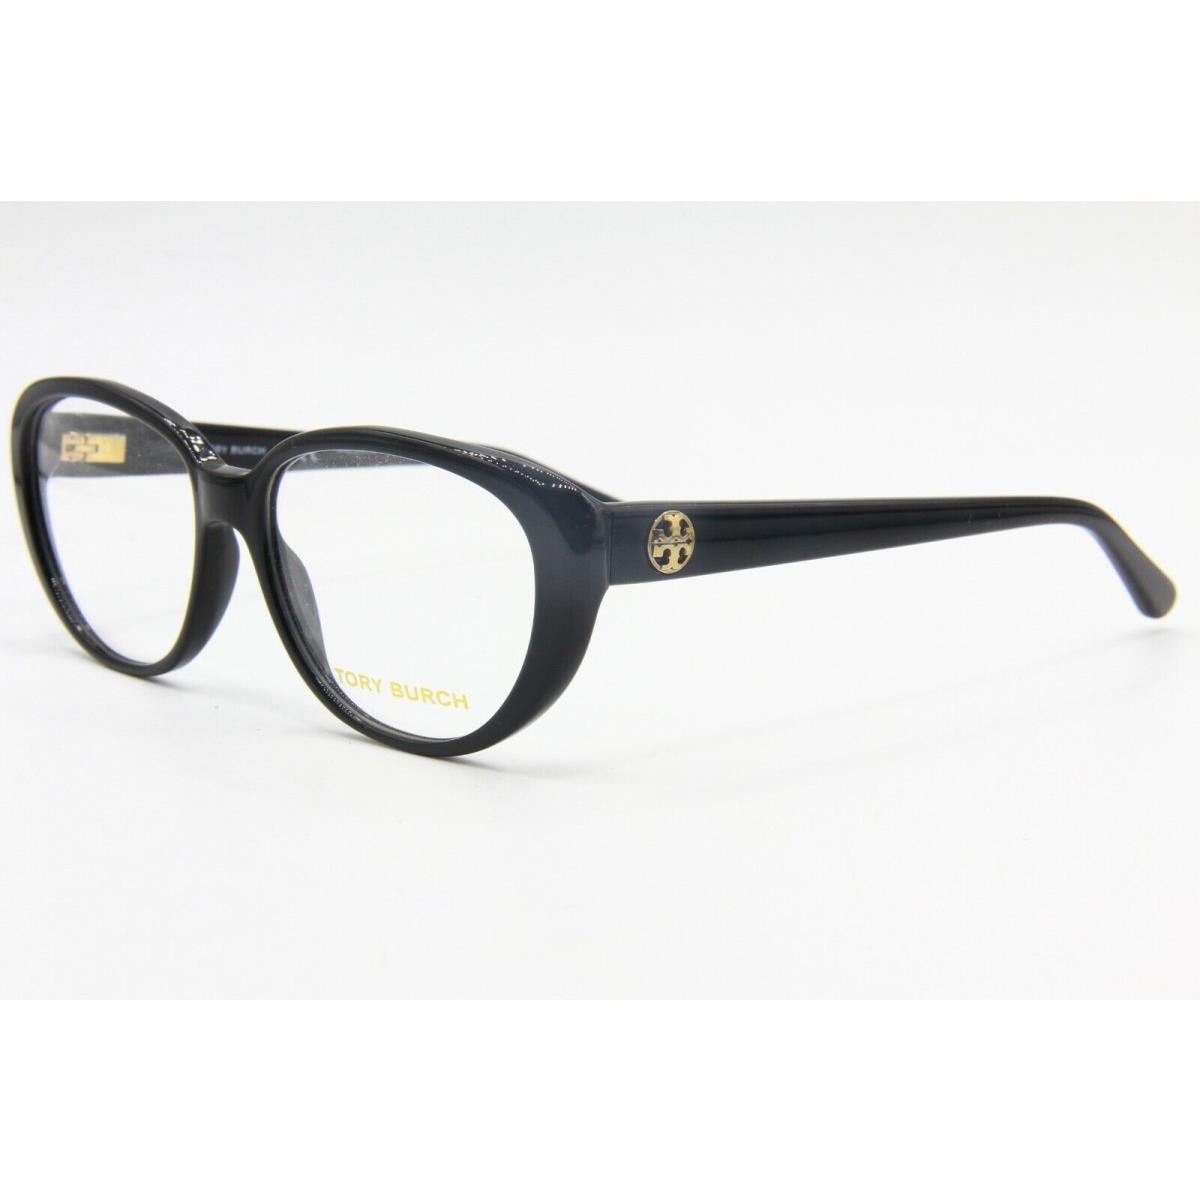 Tory Burch TY 2078 1377 Black Eyeglasses Frame TY2078 RX 52-15